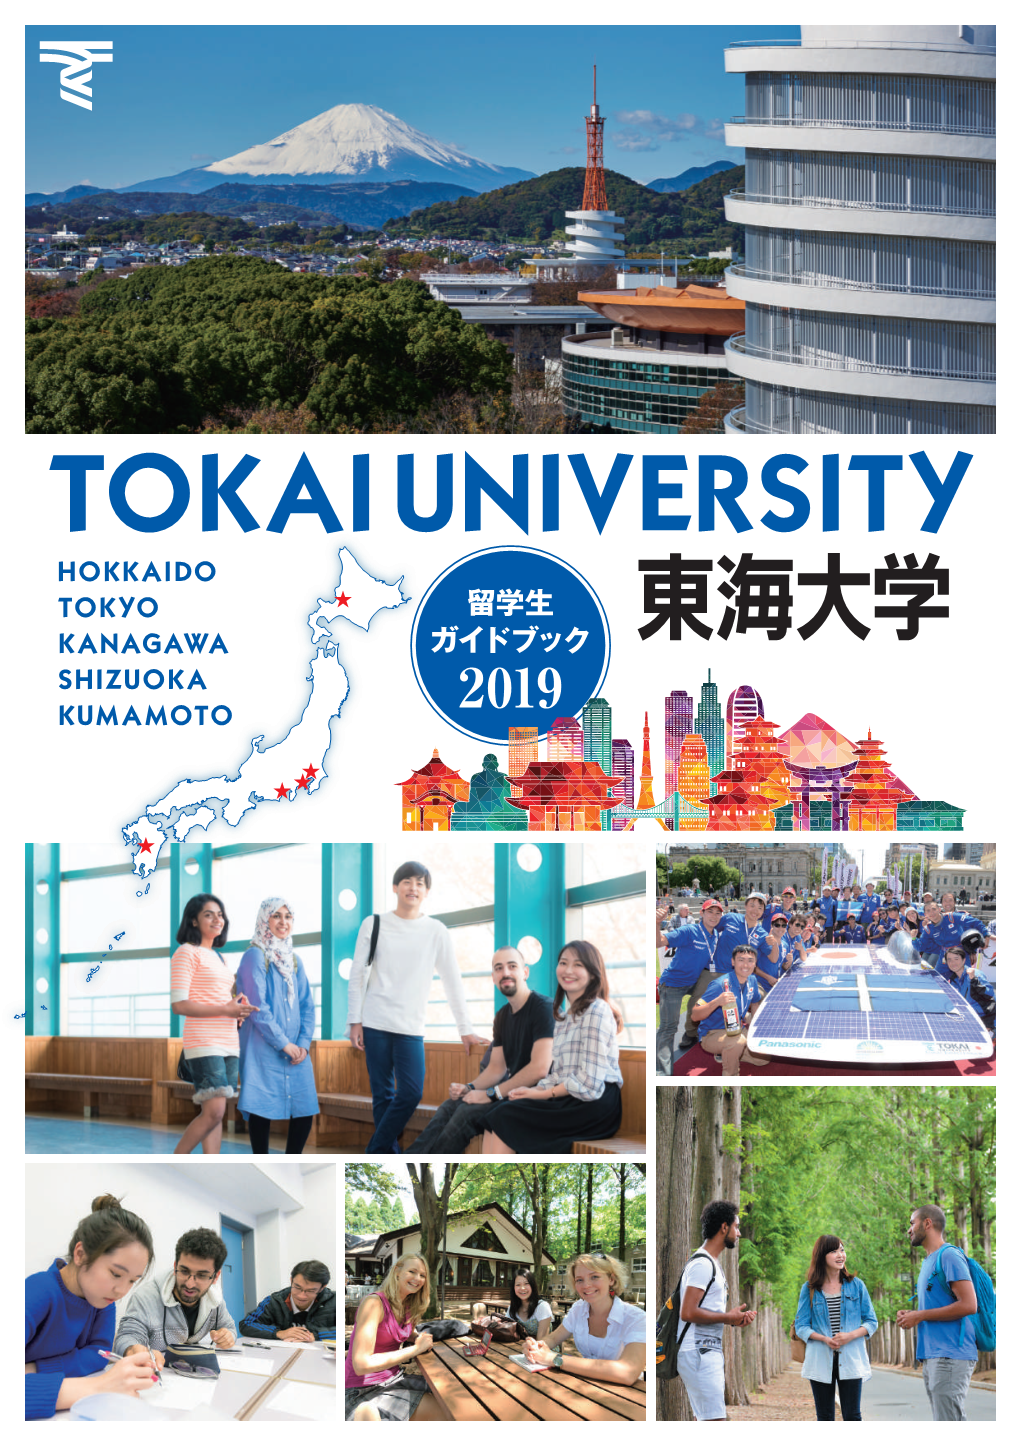 Tokai University Asean